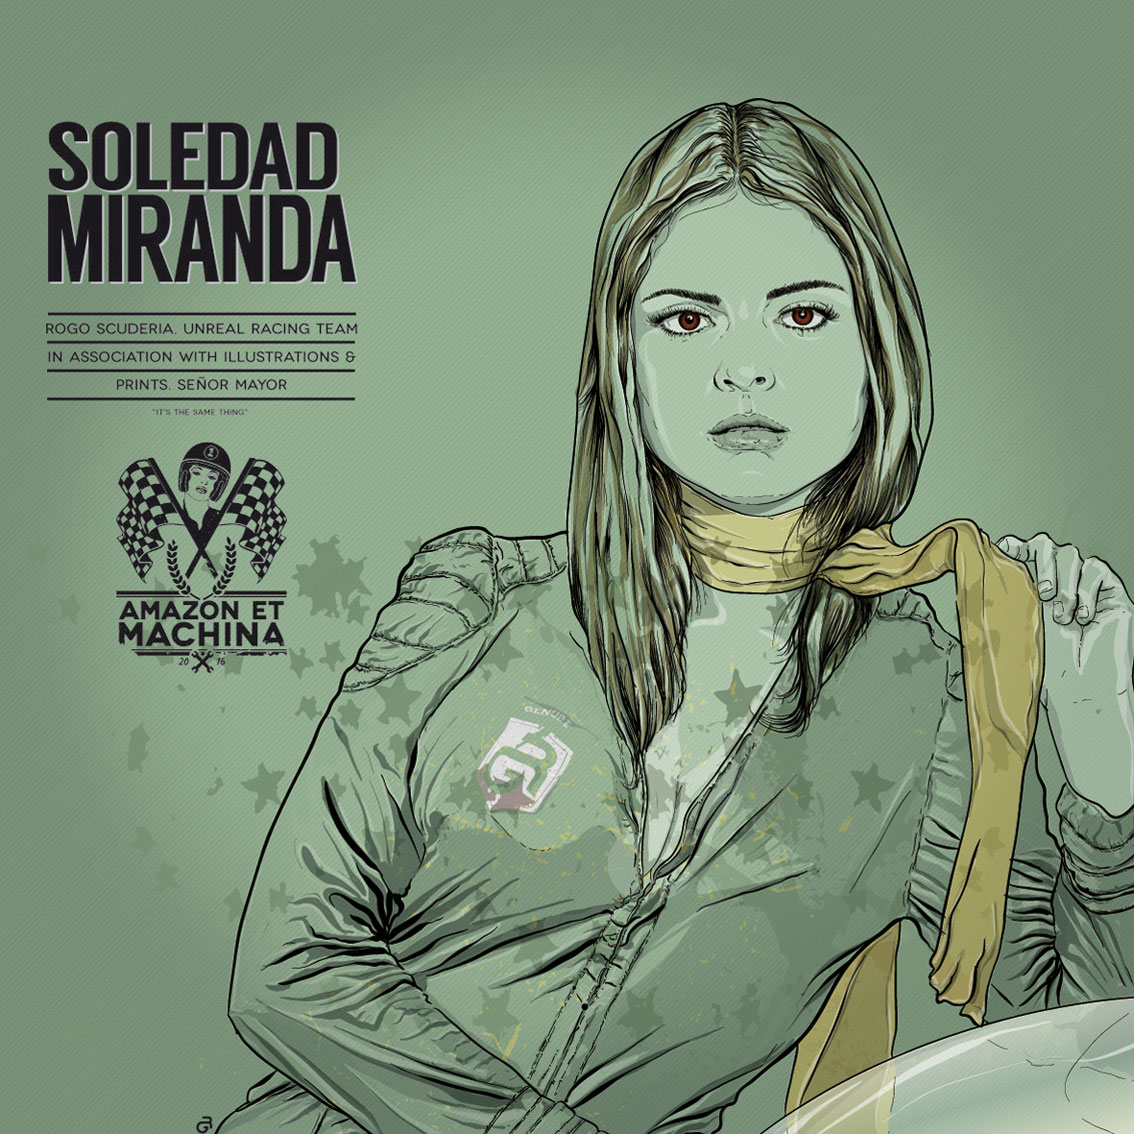 Soledad Miranda retrato. Amazon et Machina